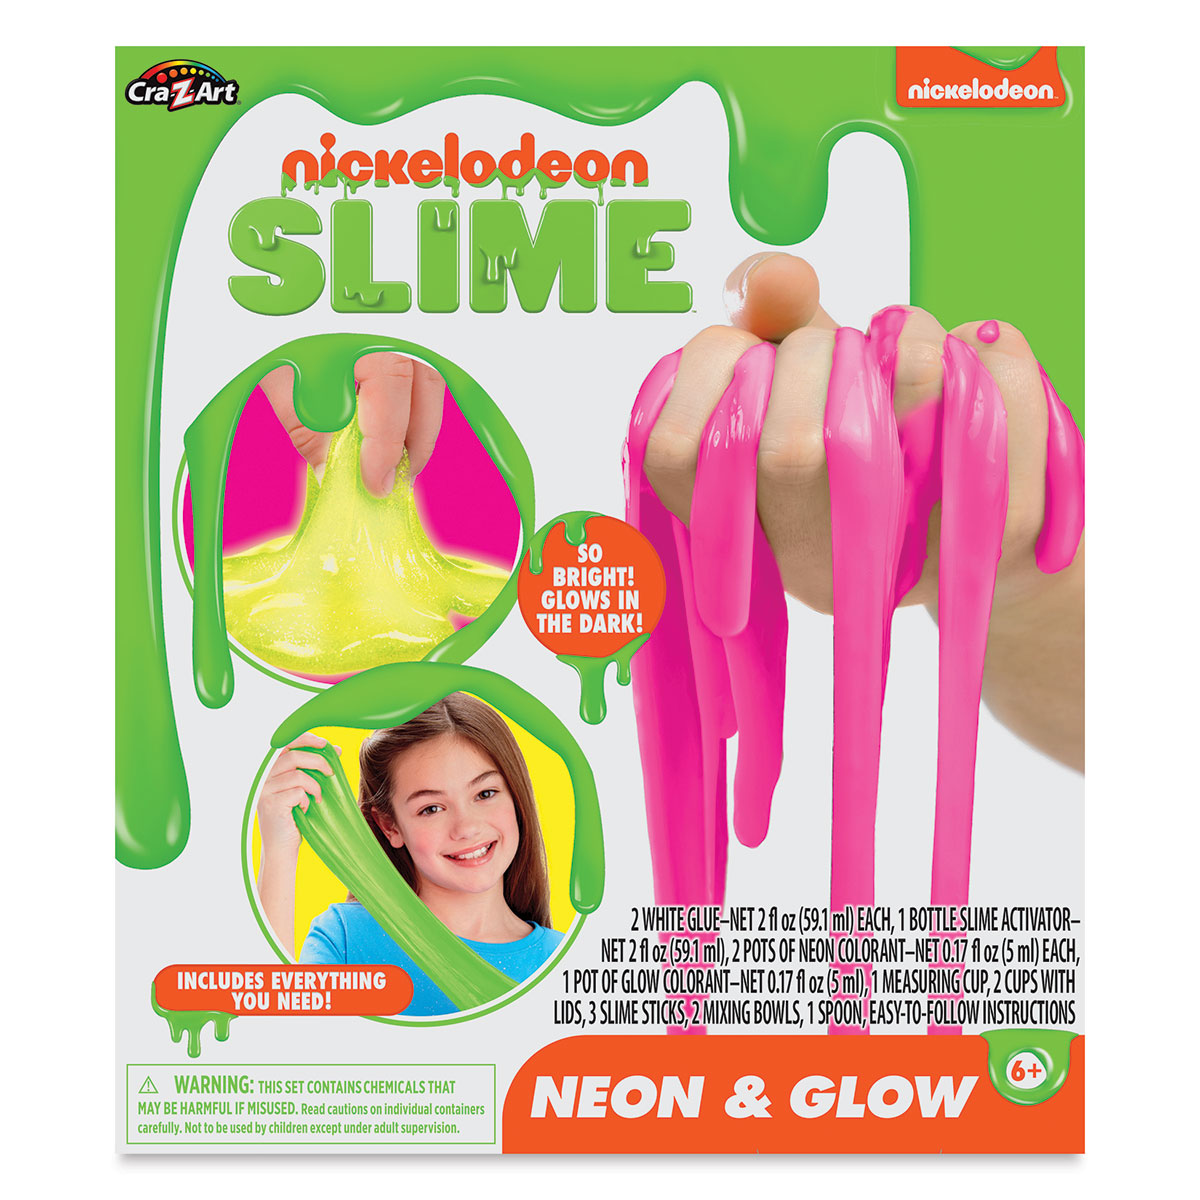 Cra-Z-Art - Our Nickelodeon Slime Studio is the ultimate DIY slime